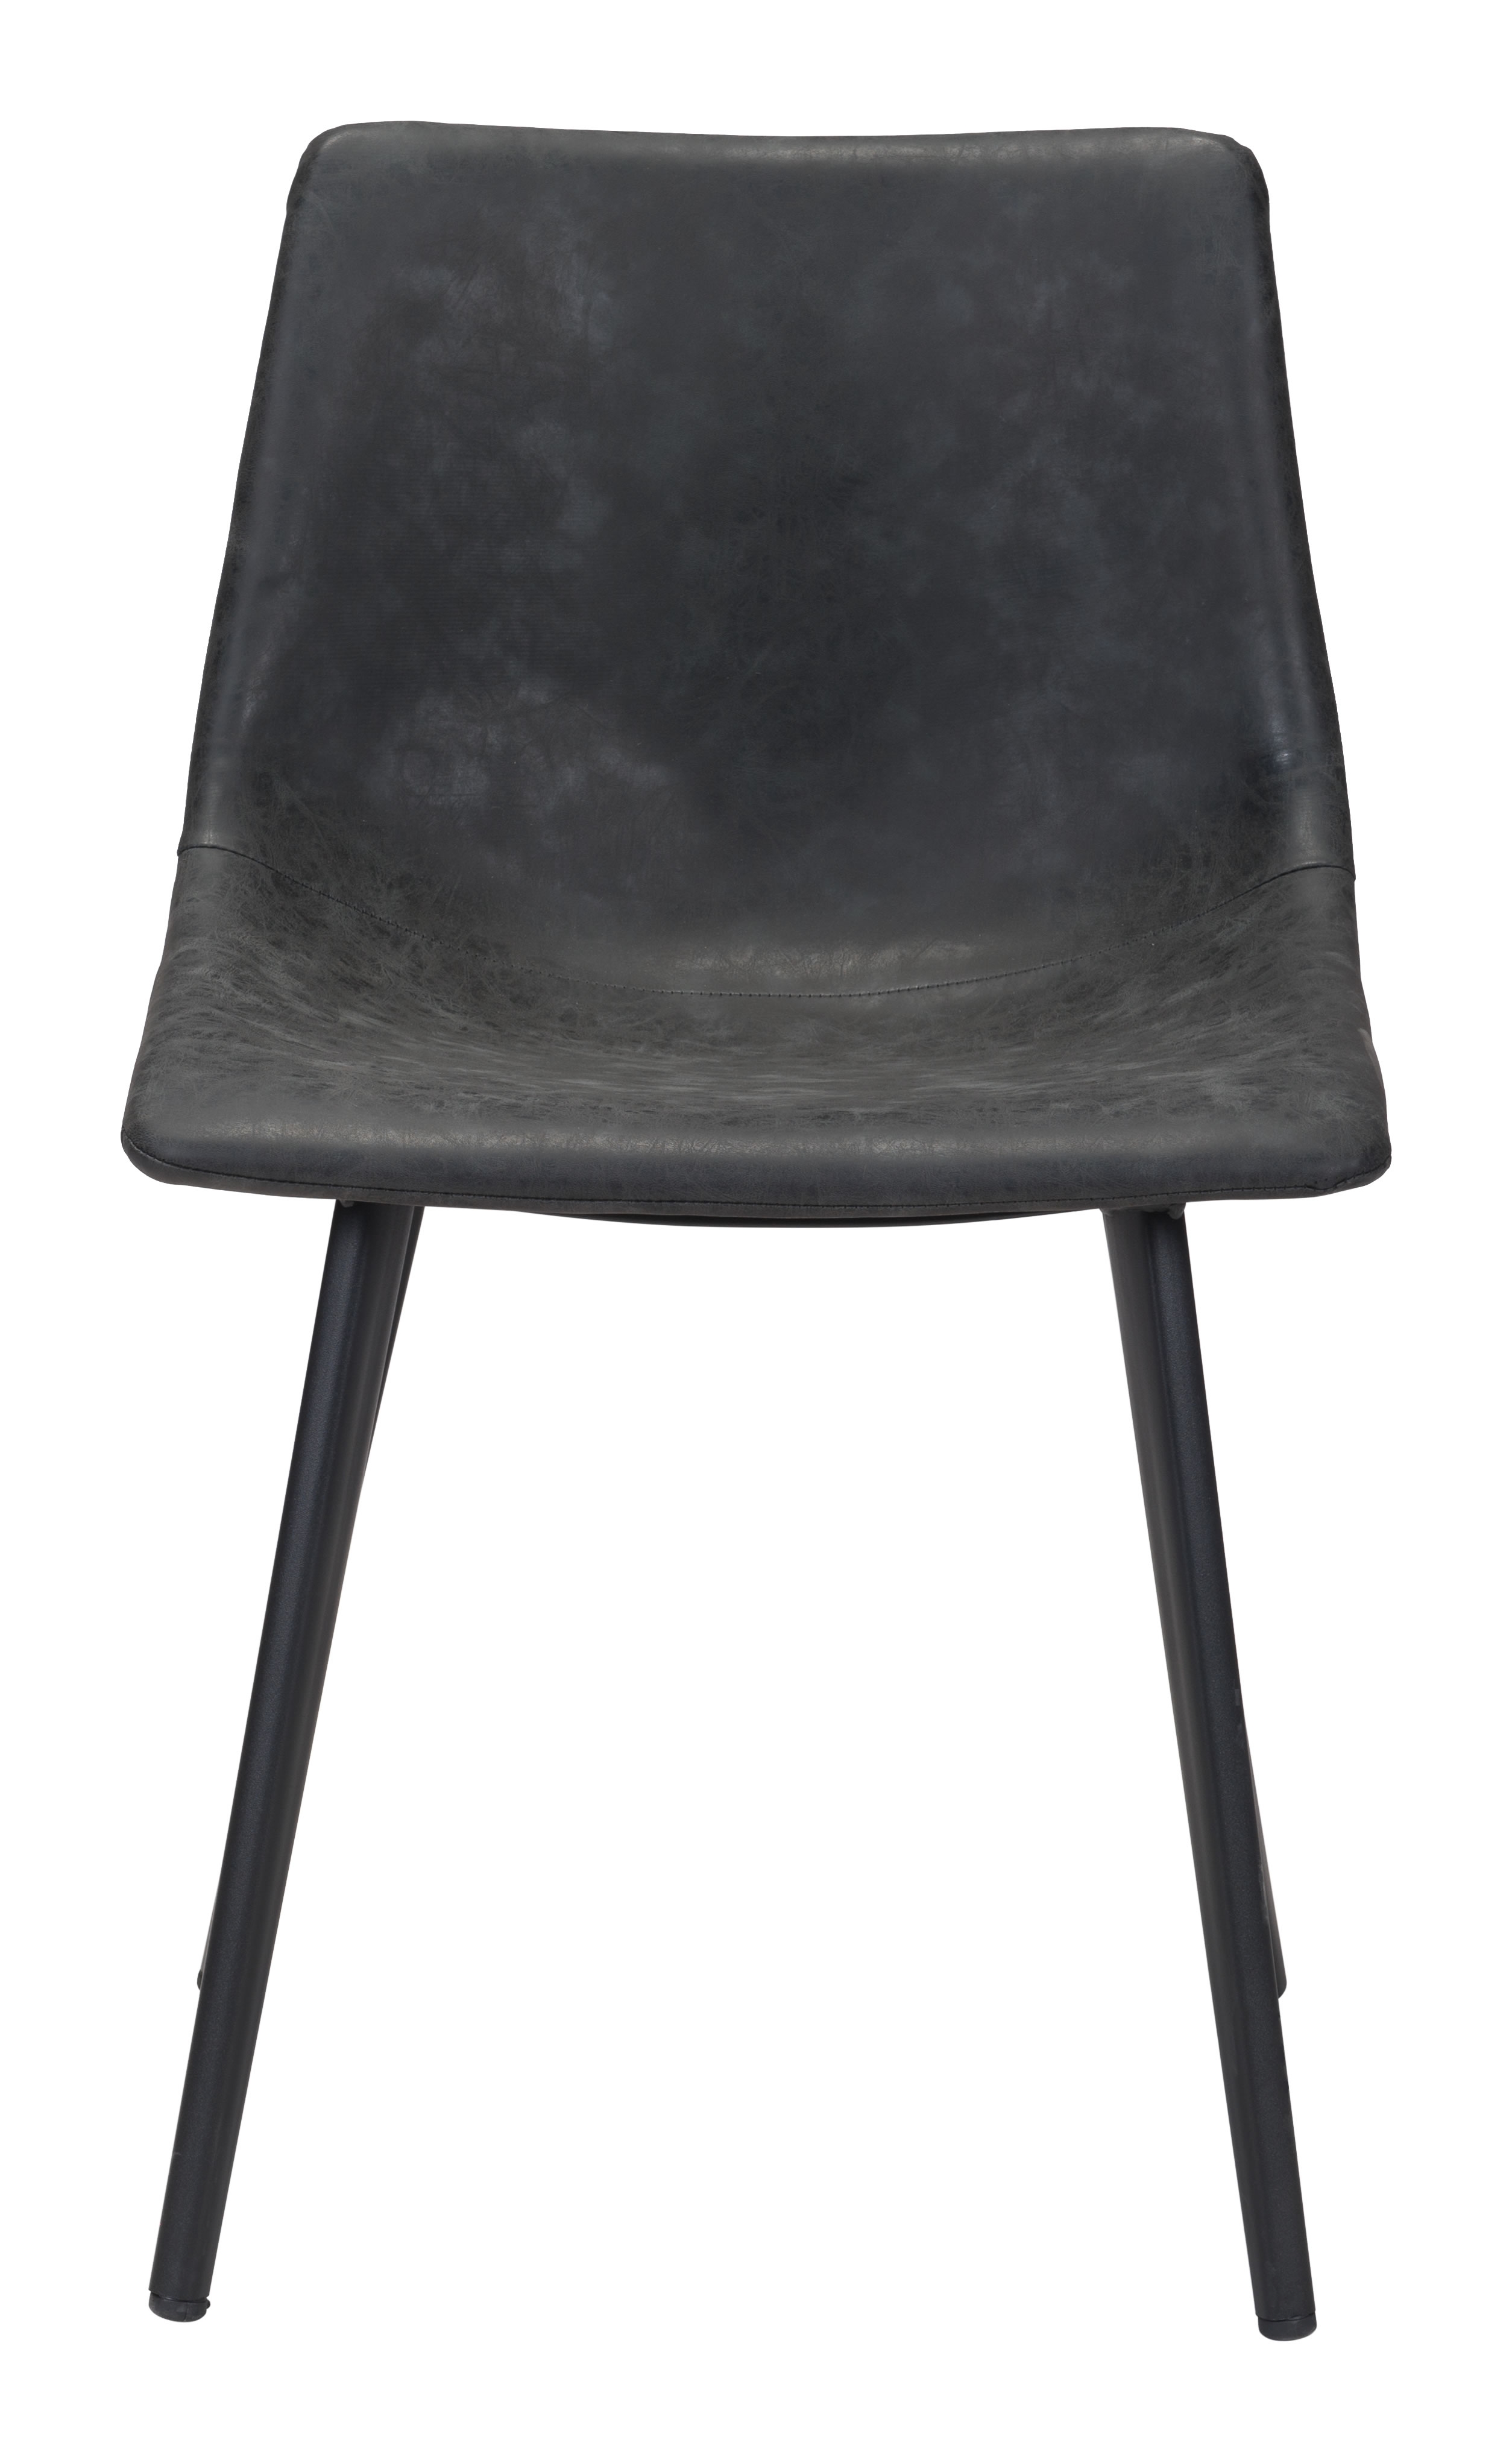 Daniel Dining Chair Vintage, Black, Set of 2 - Image 2